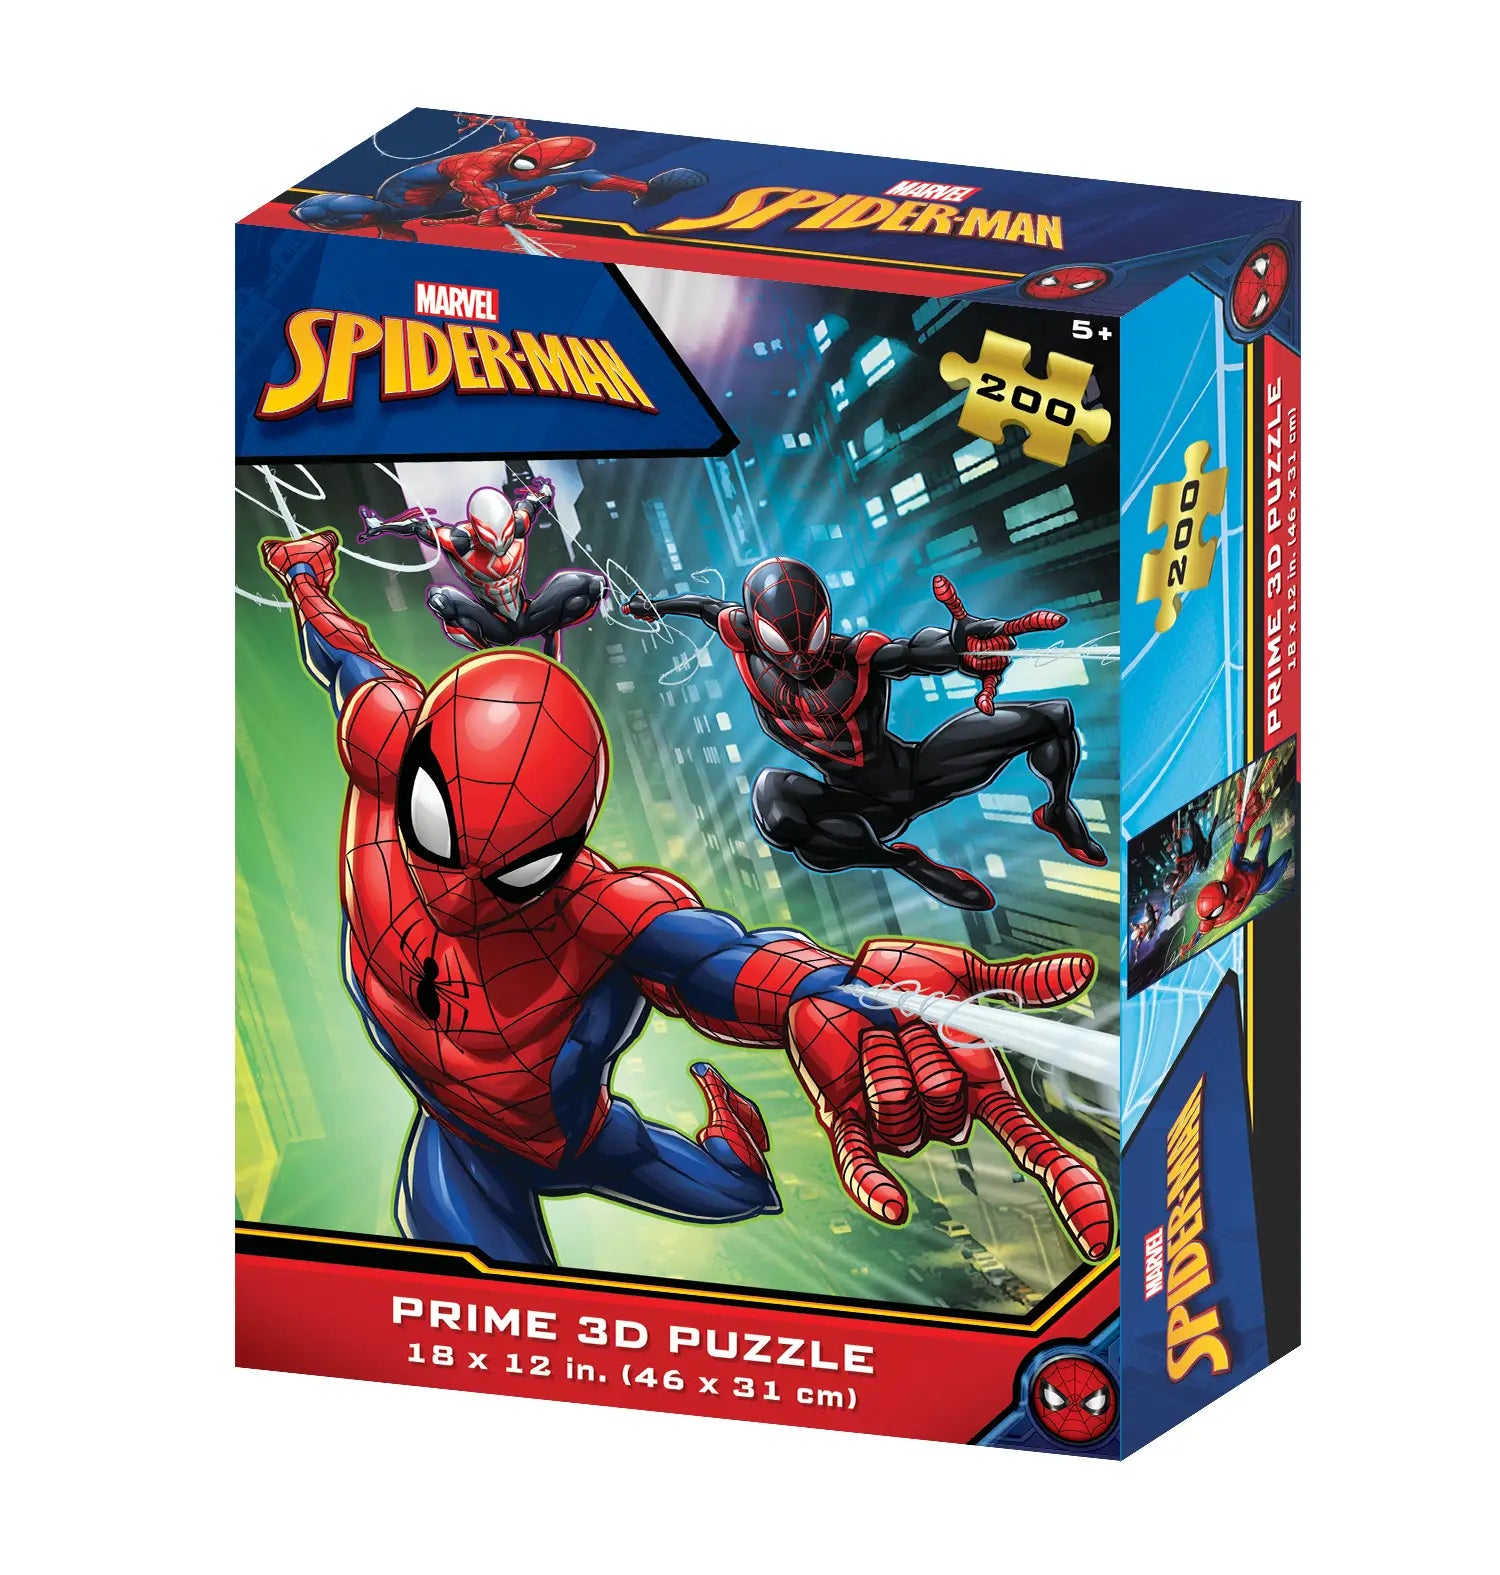 Prime 3D Marvel Spider-Man 200 Piece Puzzle